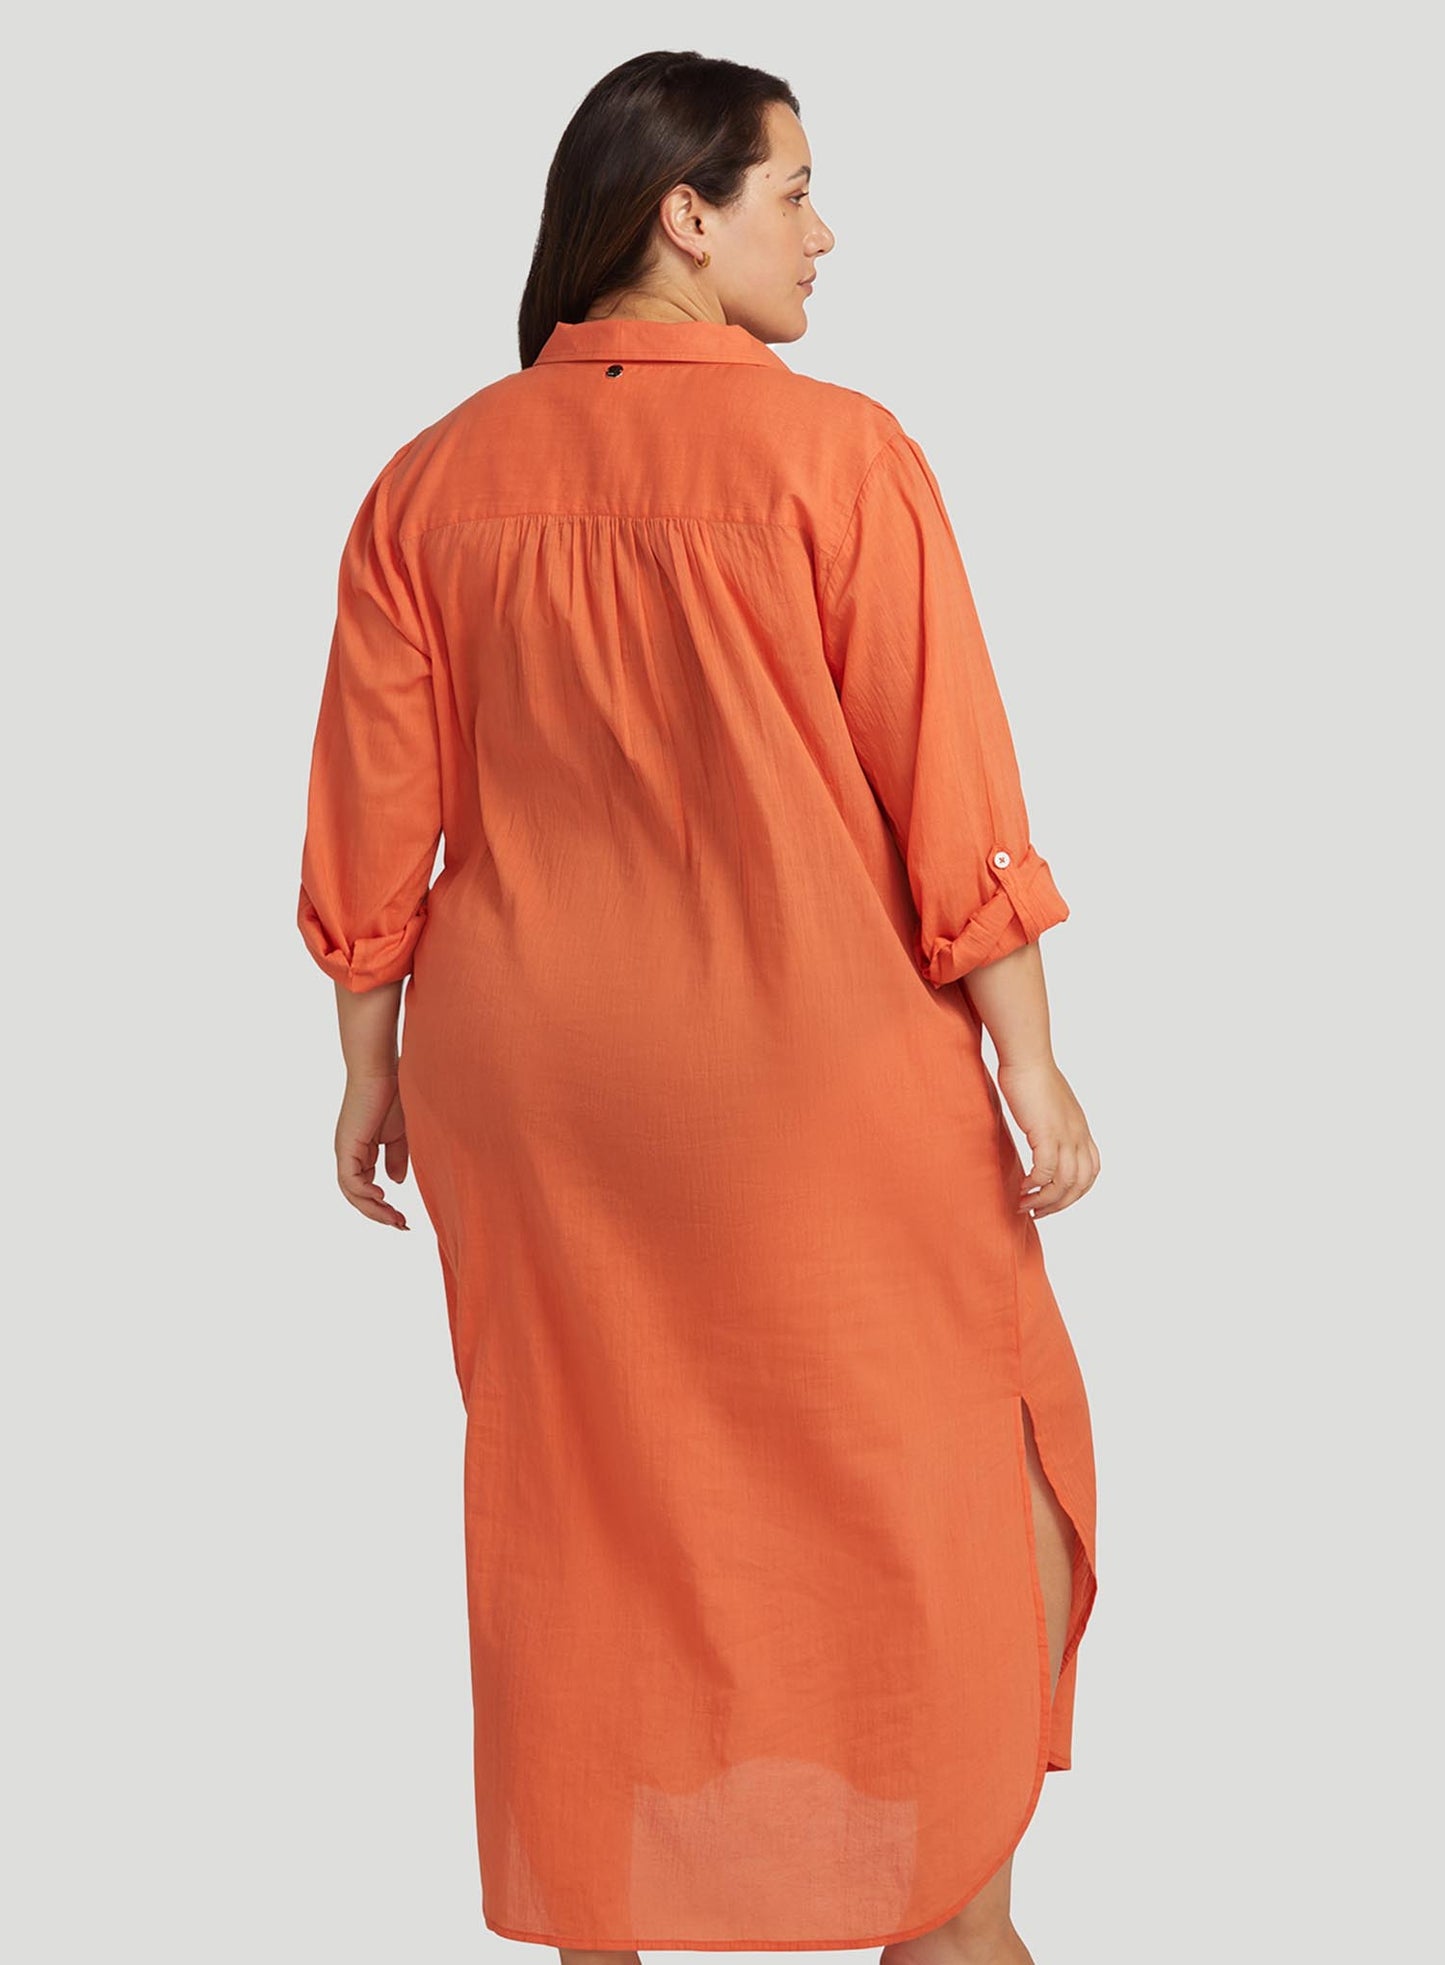 Artesands: Monteverdi Over Shirt Maxi Cover Up Orange